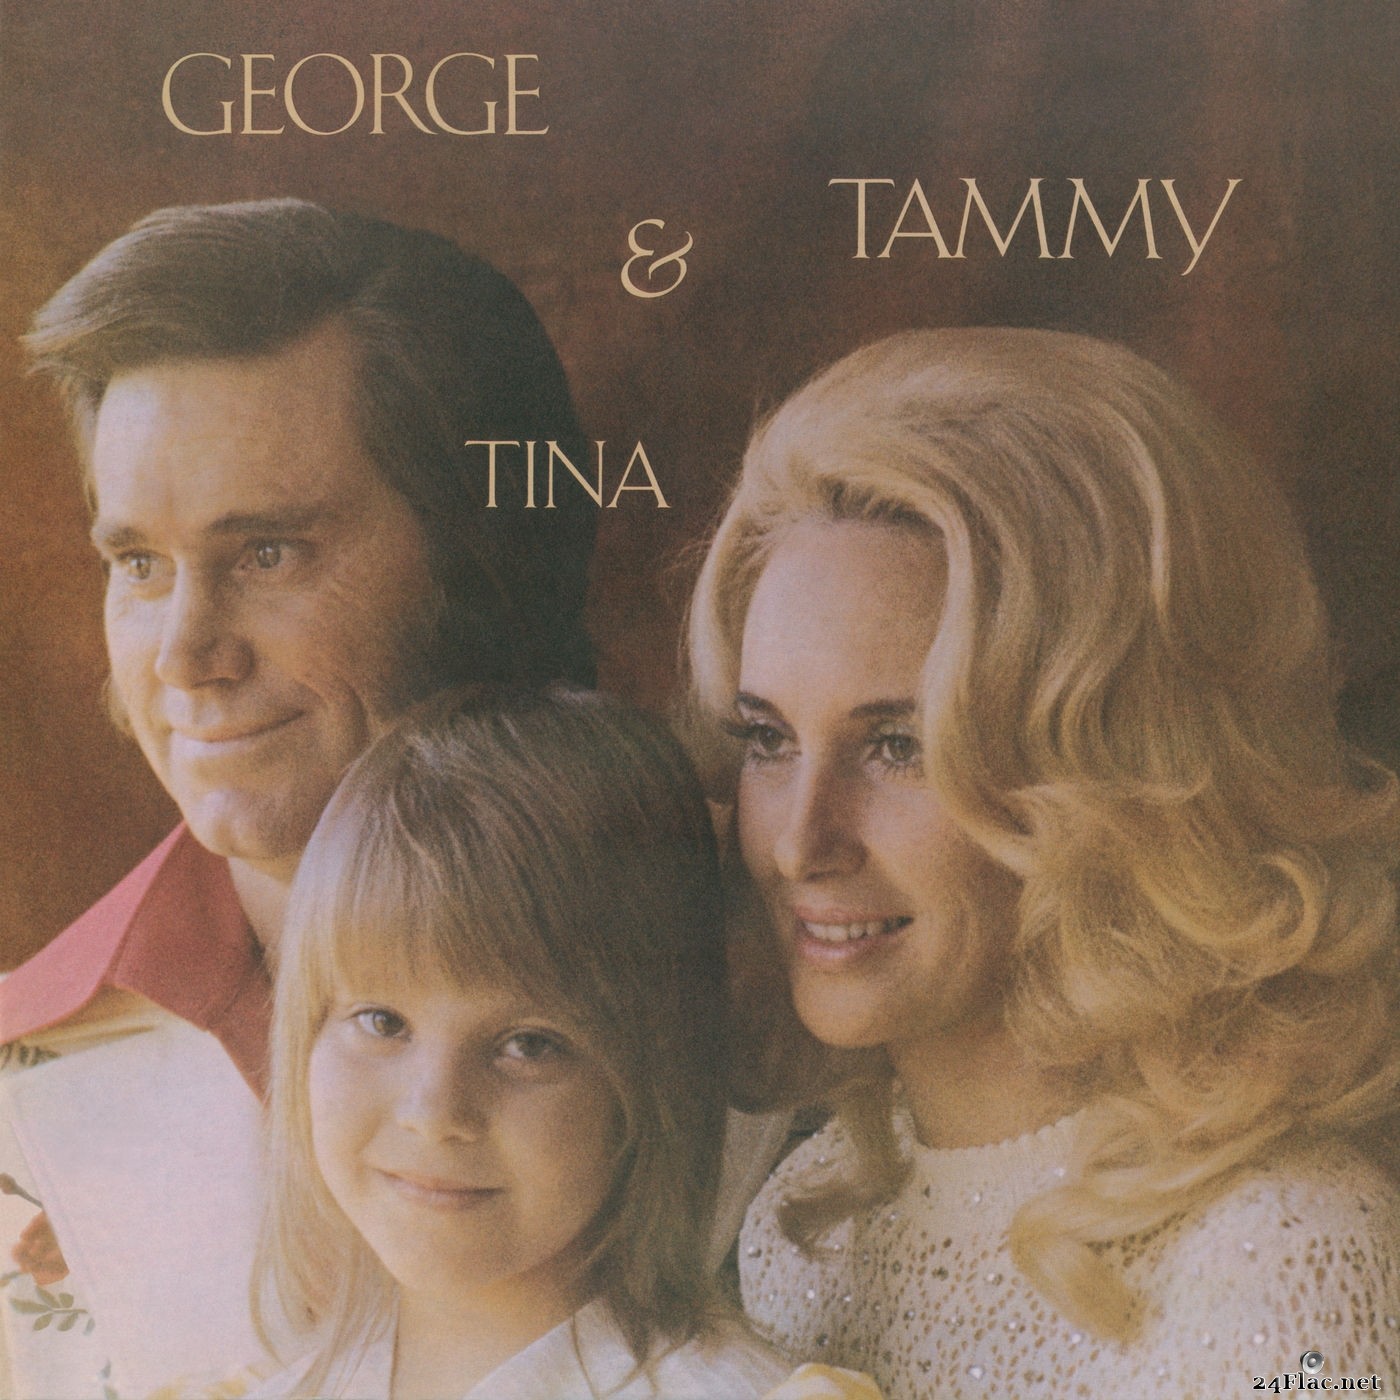 George Jones & Tammy Wynette - George & Tammy & Tina (2016) Hi-Res